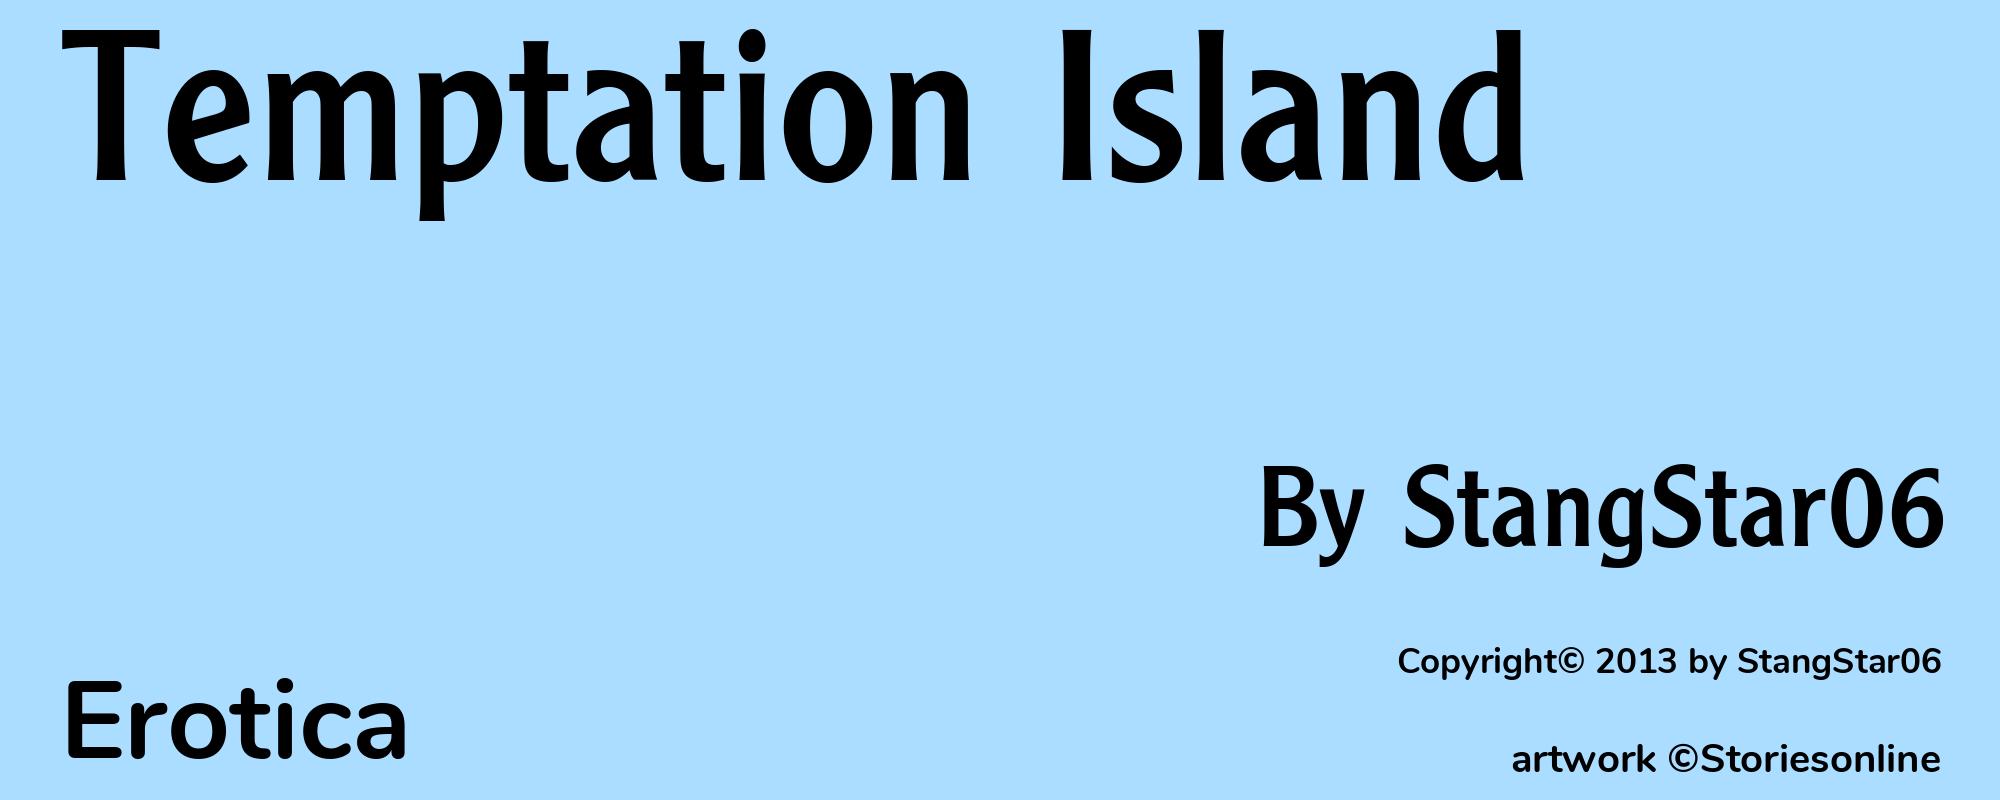 Temptation Island - Cover